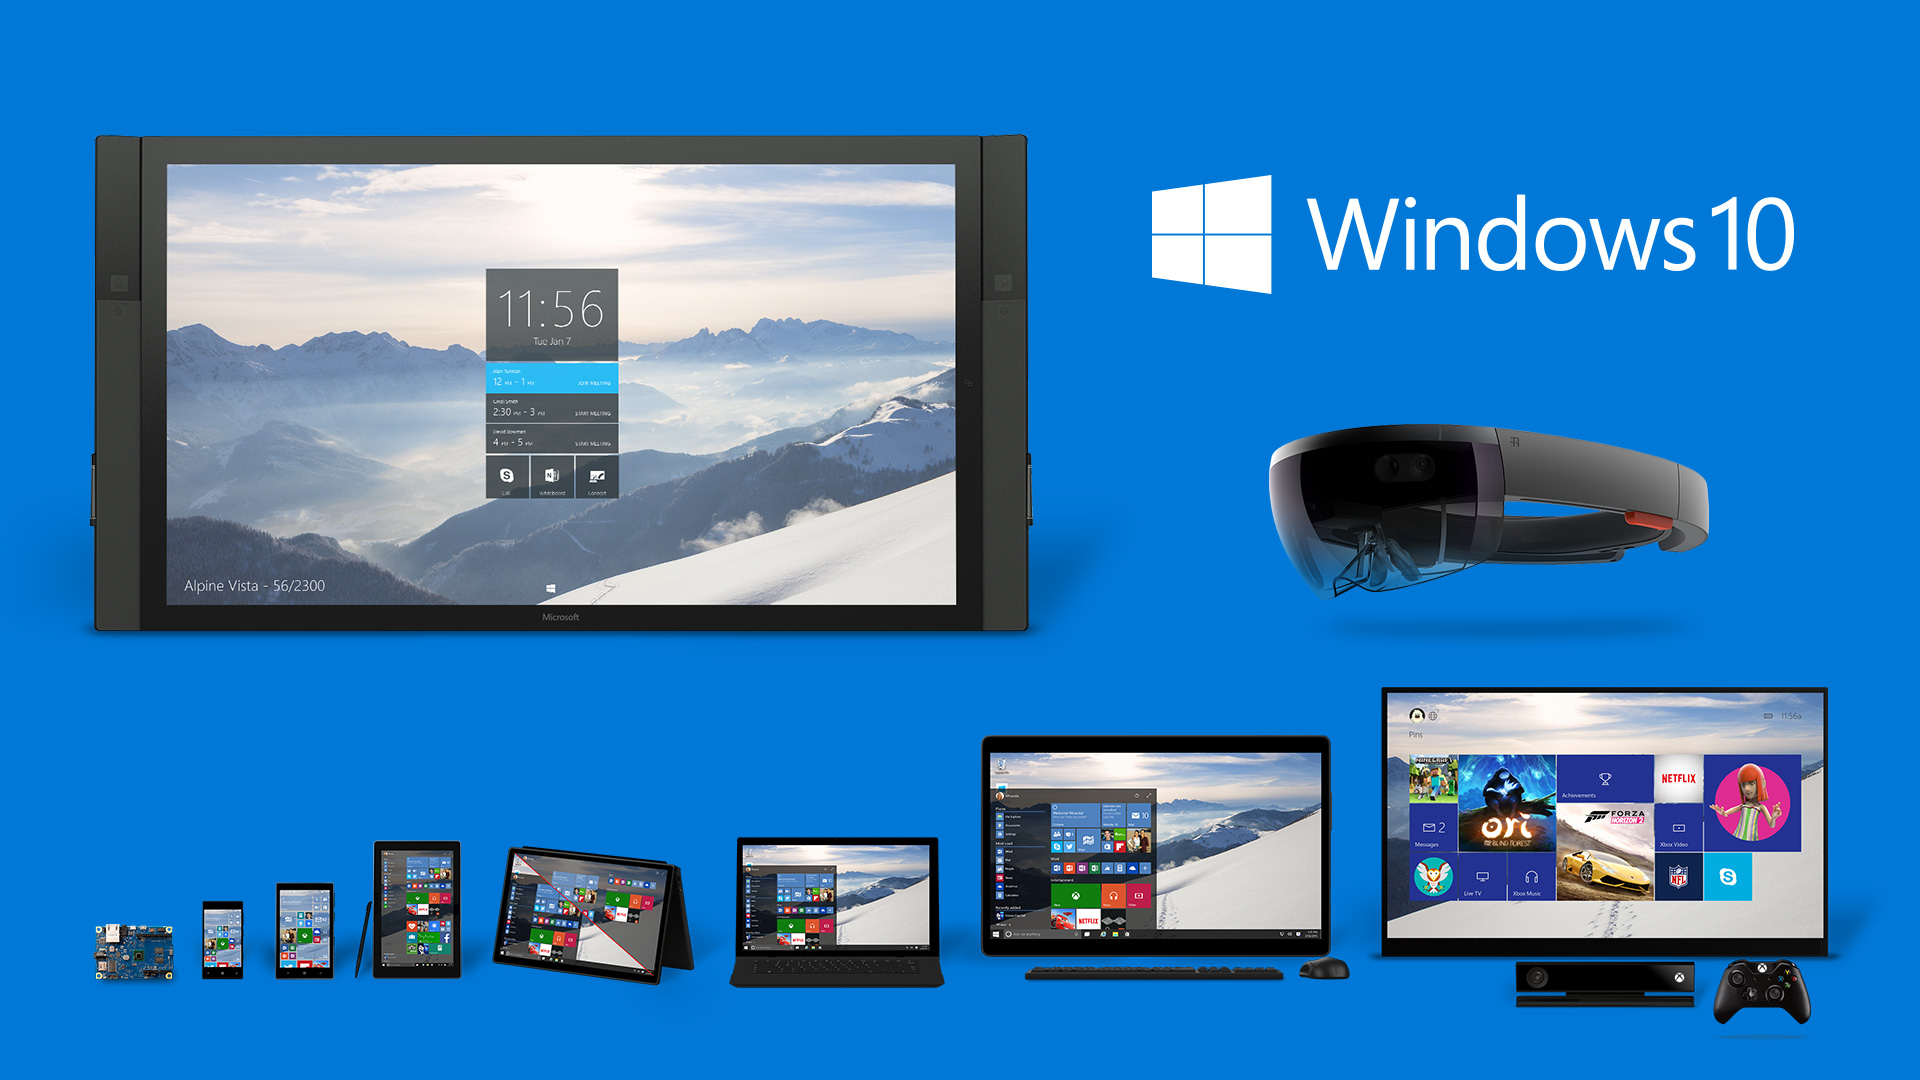 Windows 10 Product Family | Genuine Windows | [ข่าว] ไขข้อข้องใจ Microsoft อธิบายคำถามยอดฮิต Windows เถื่อนอัพเป็น Windows 10 ได้ไหม??